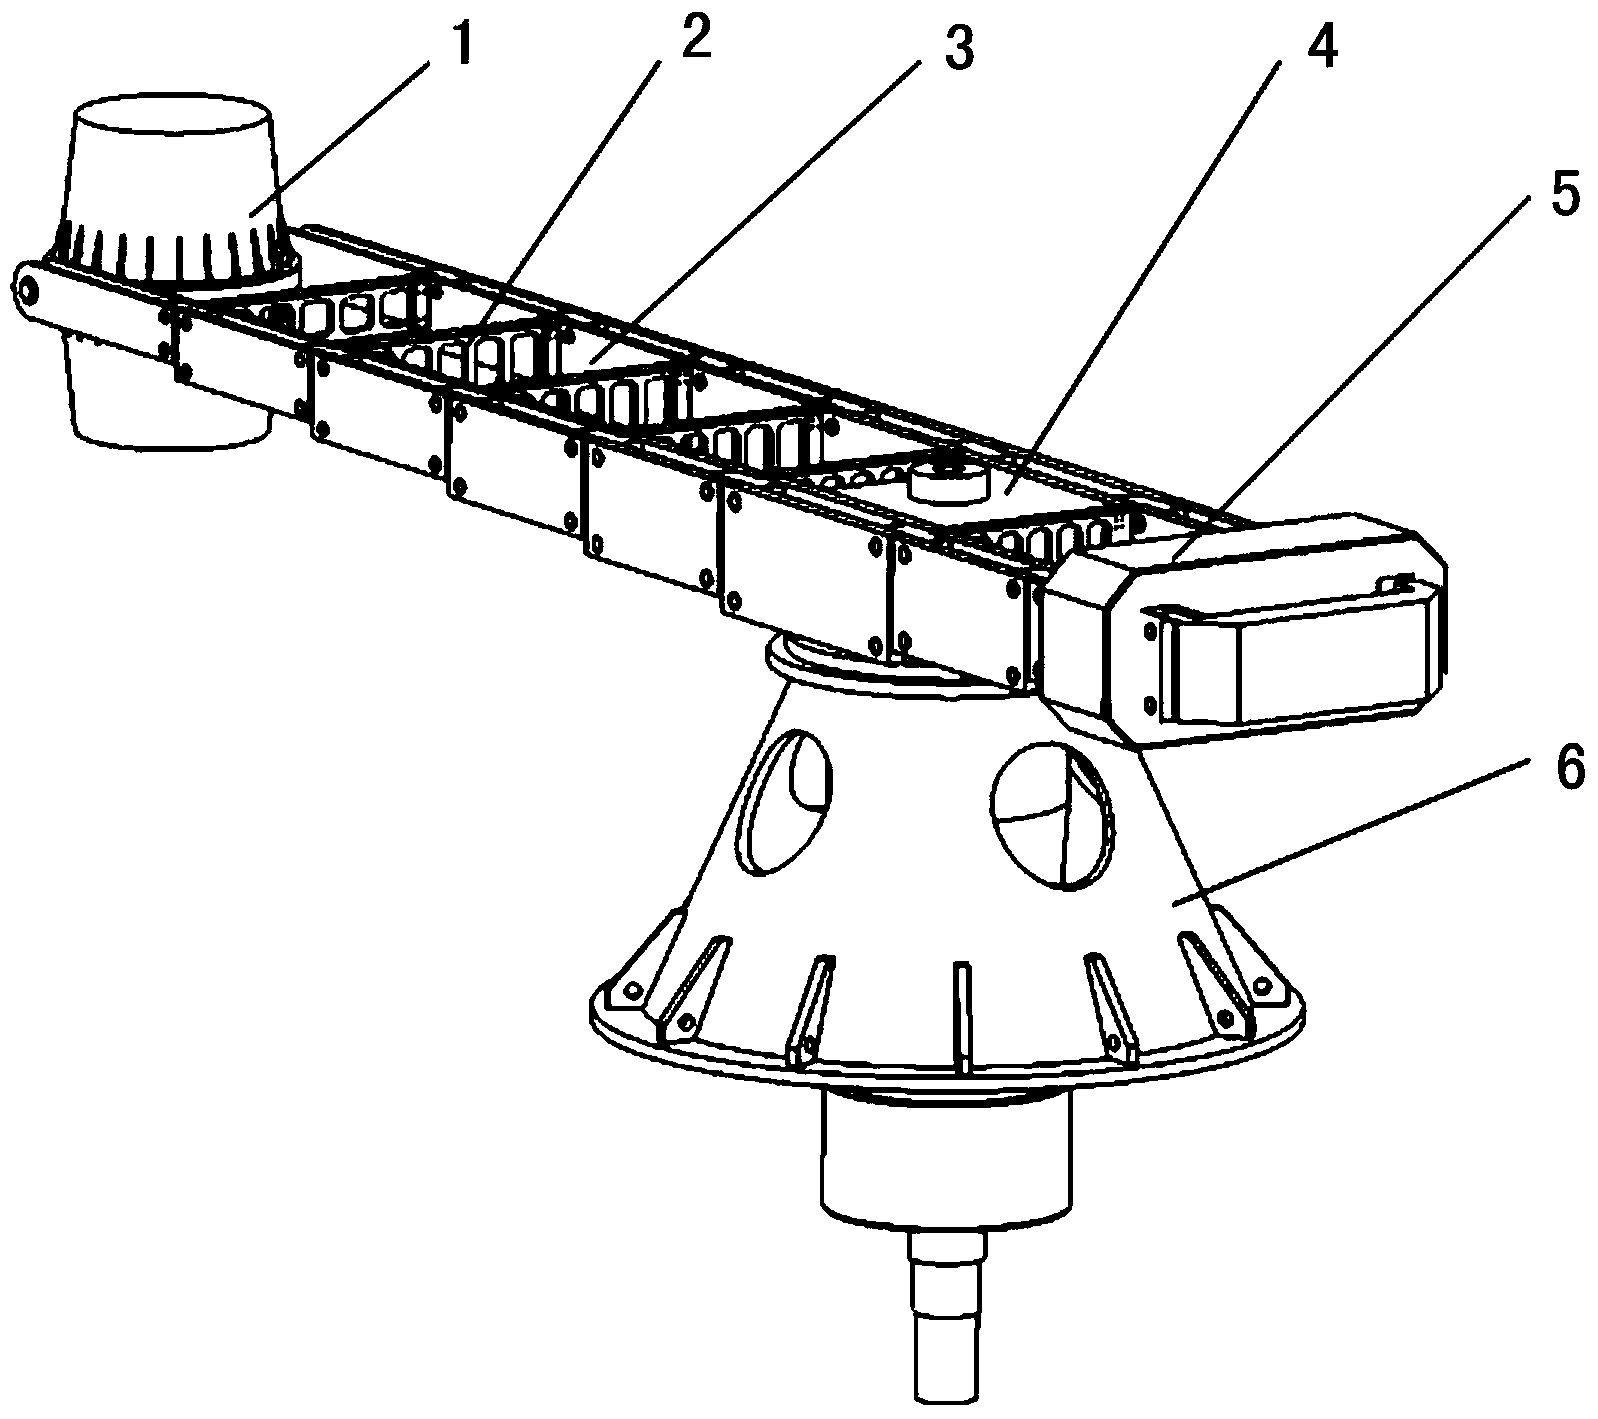 Discrete combination type arm frame for super-large centrifugal machine